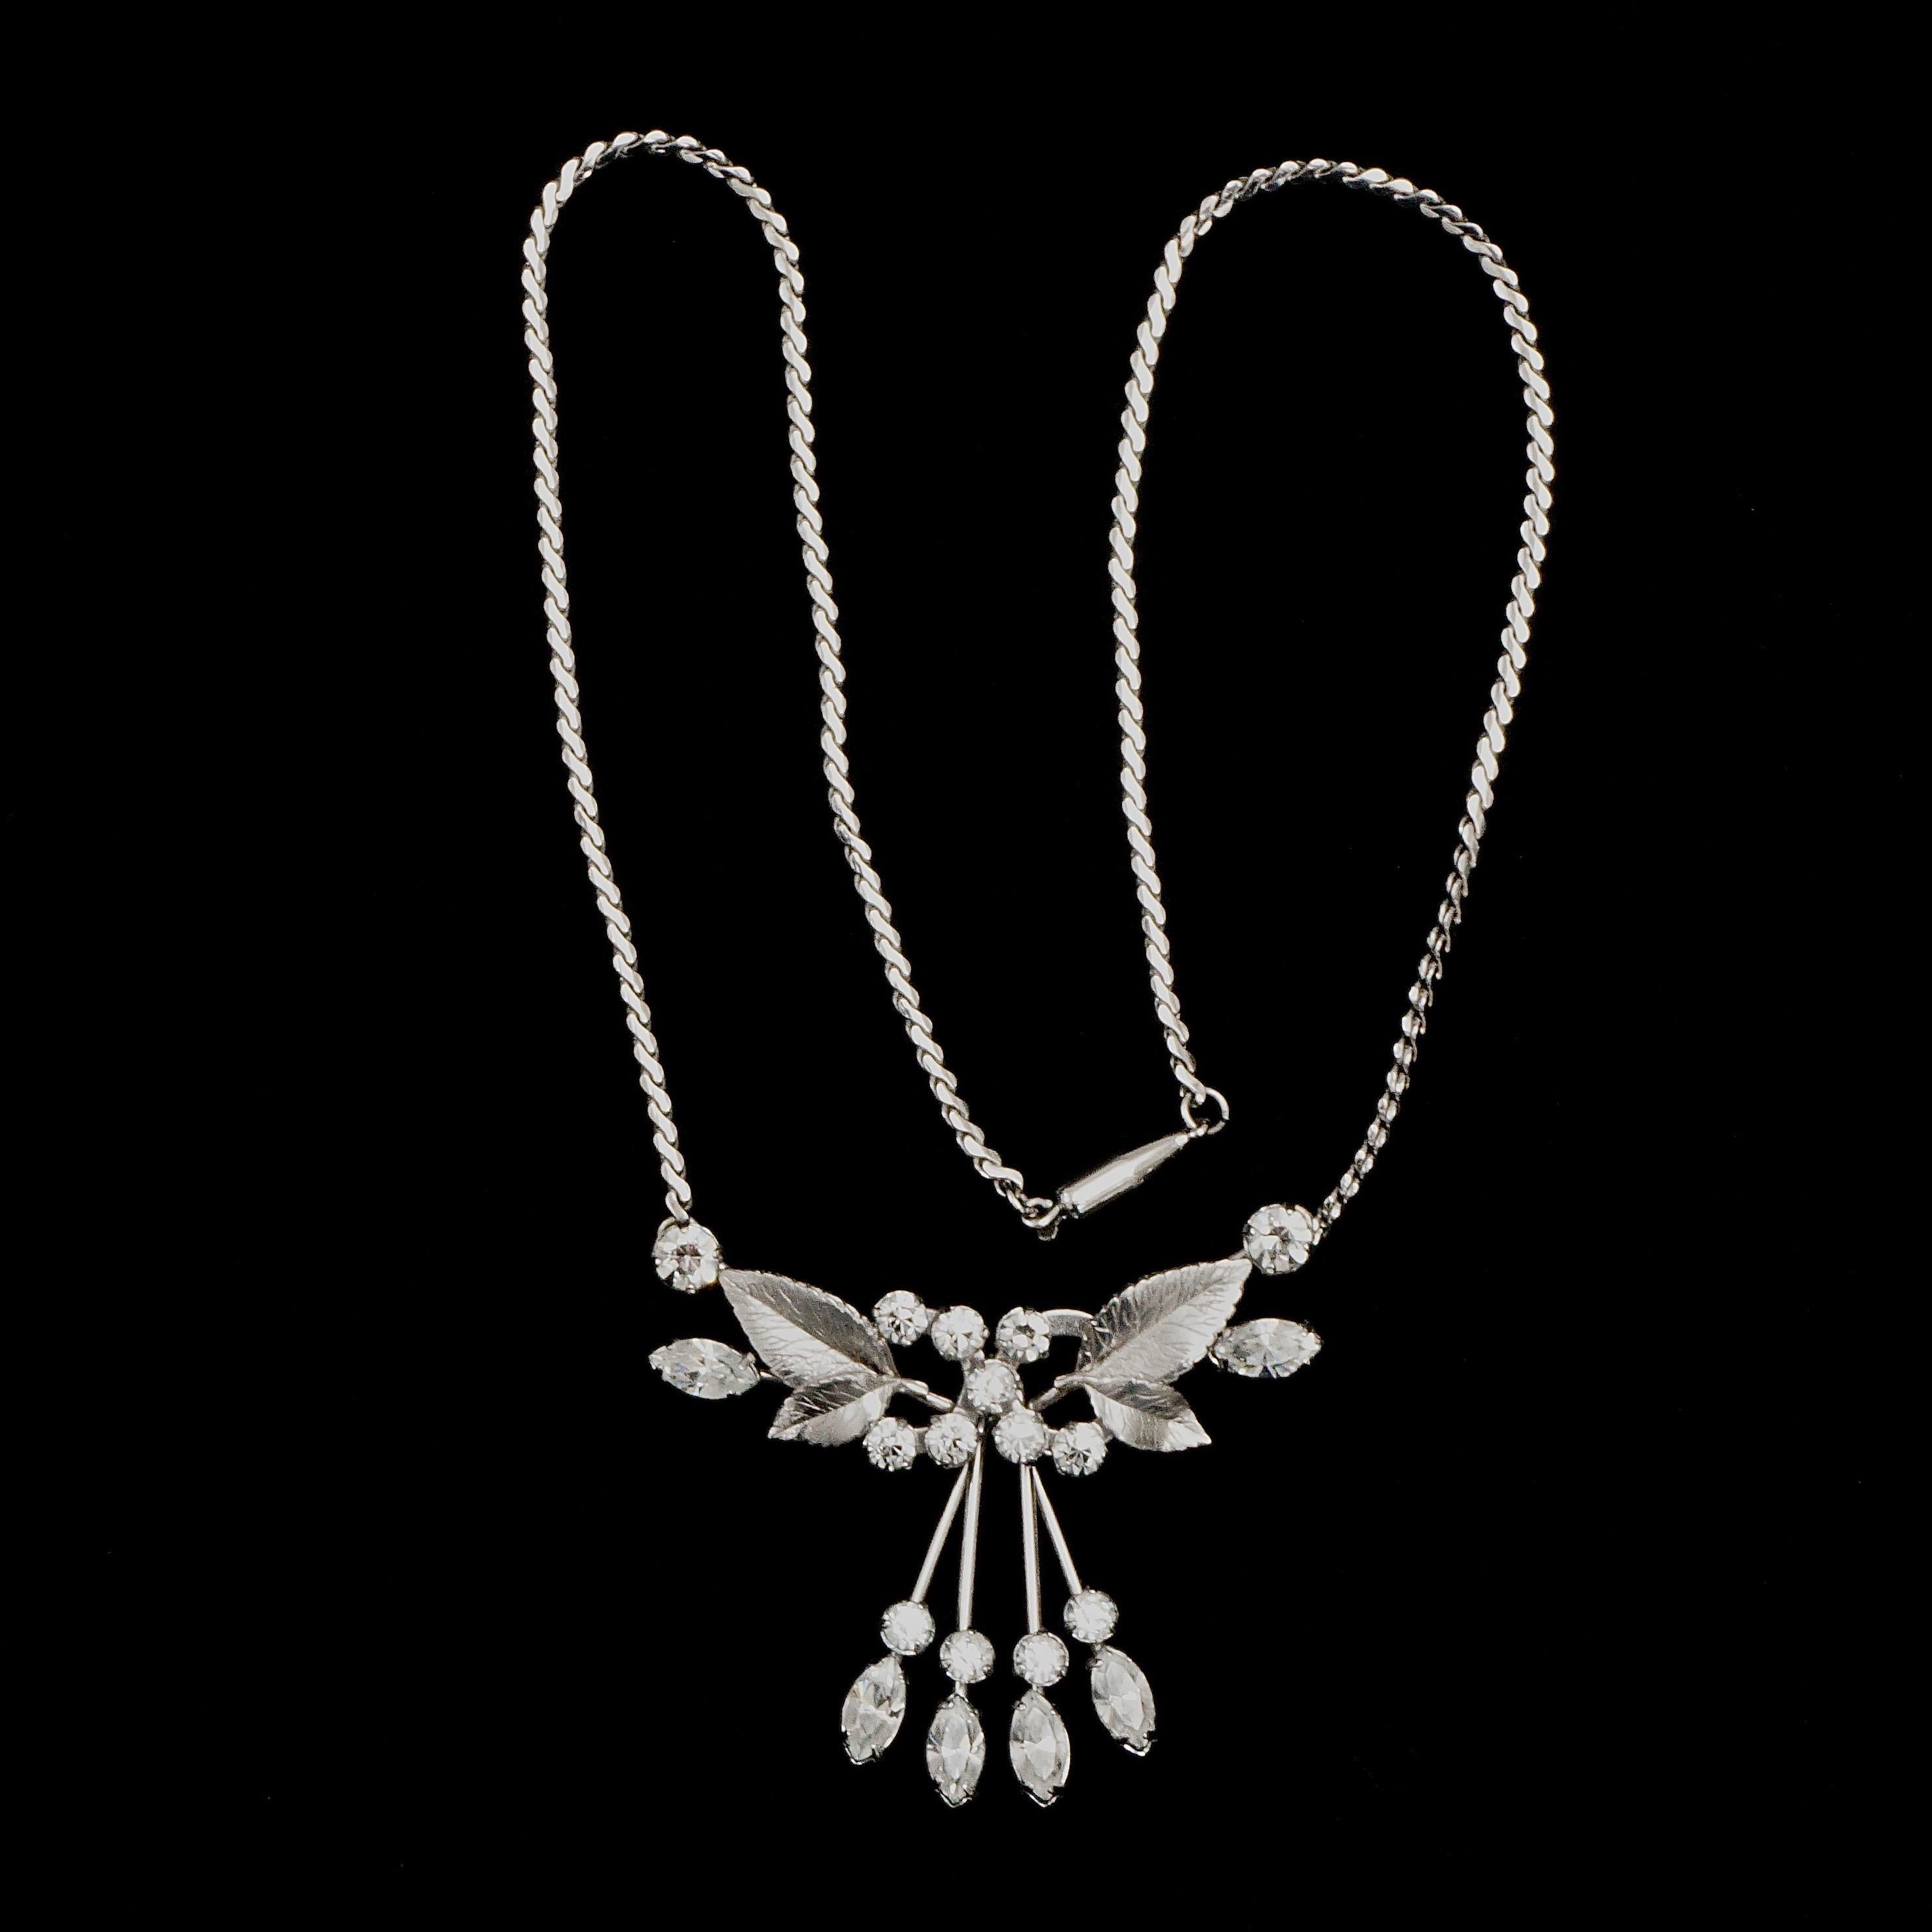 Krementz 14K White Gold Overlay Leaf Design Rhinestone Necklace and Earring Set For Sale 5